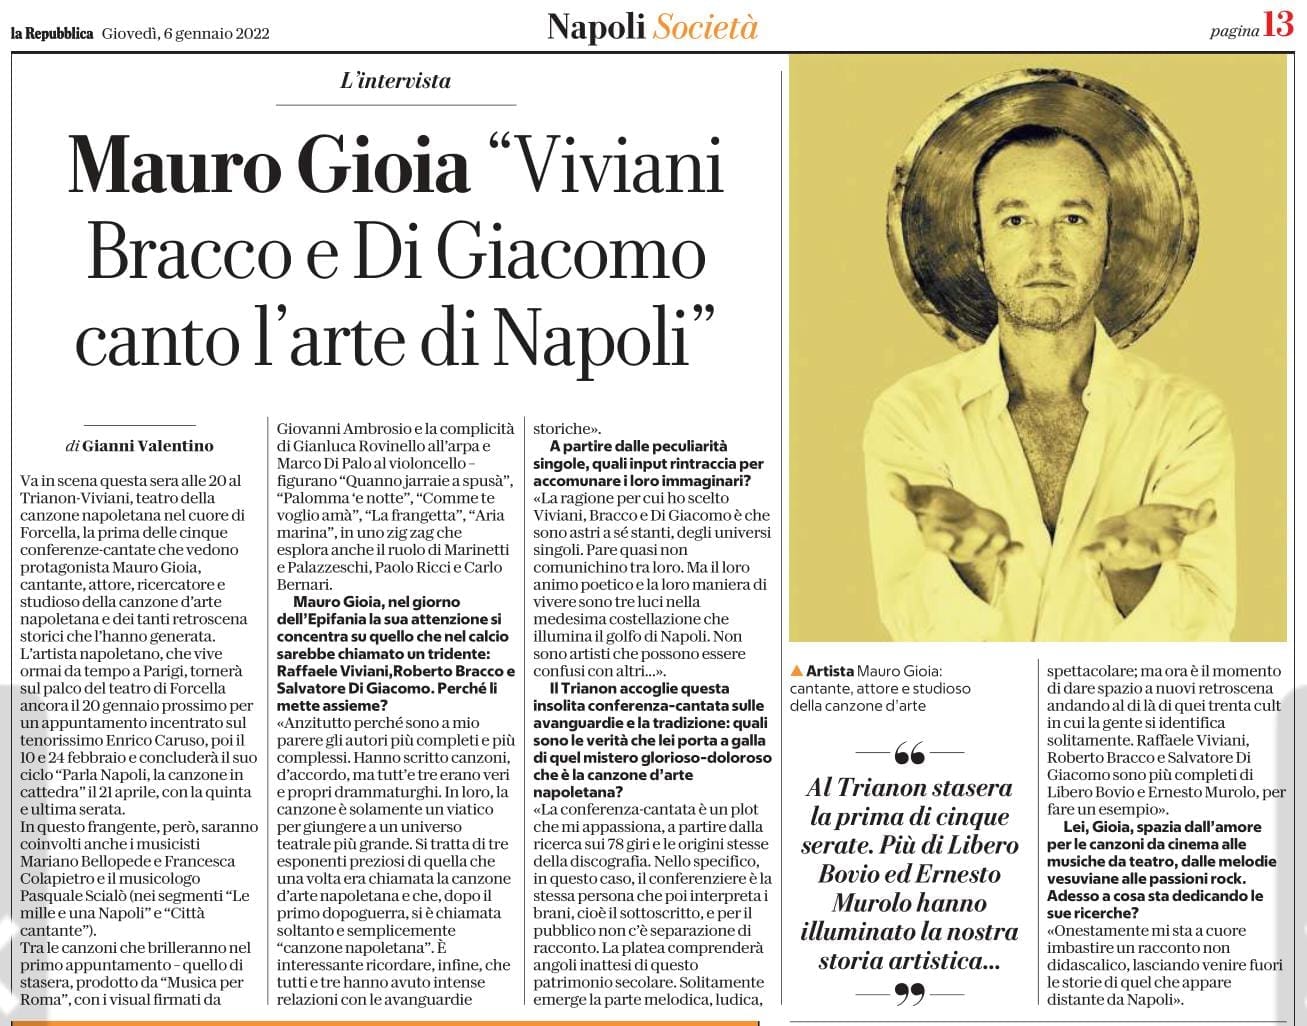 Mauro Gioia Gianni Valentino Interview